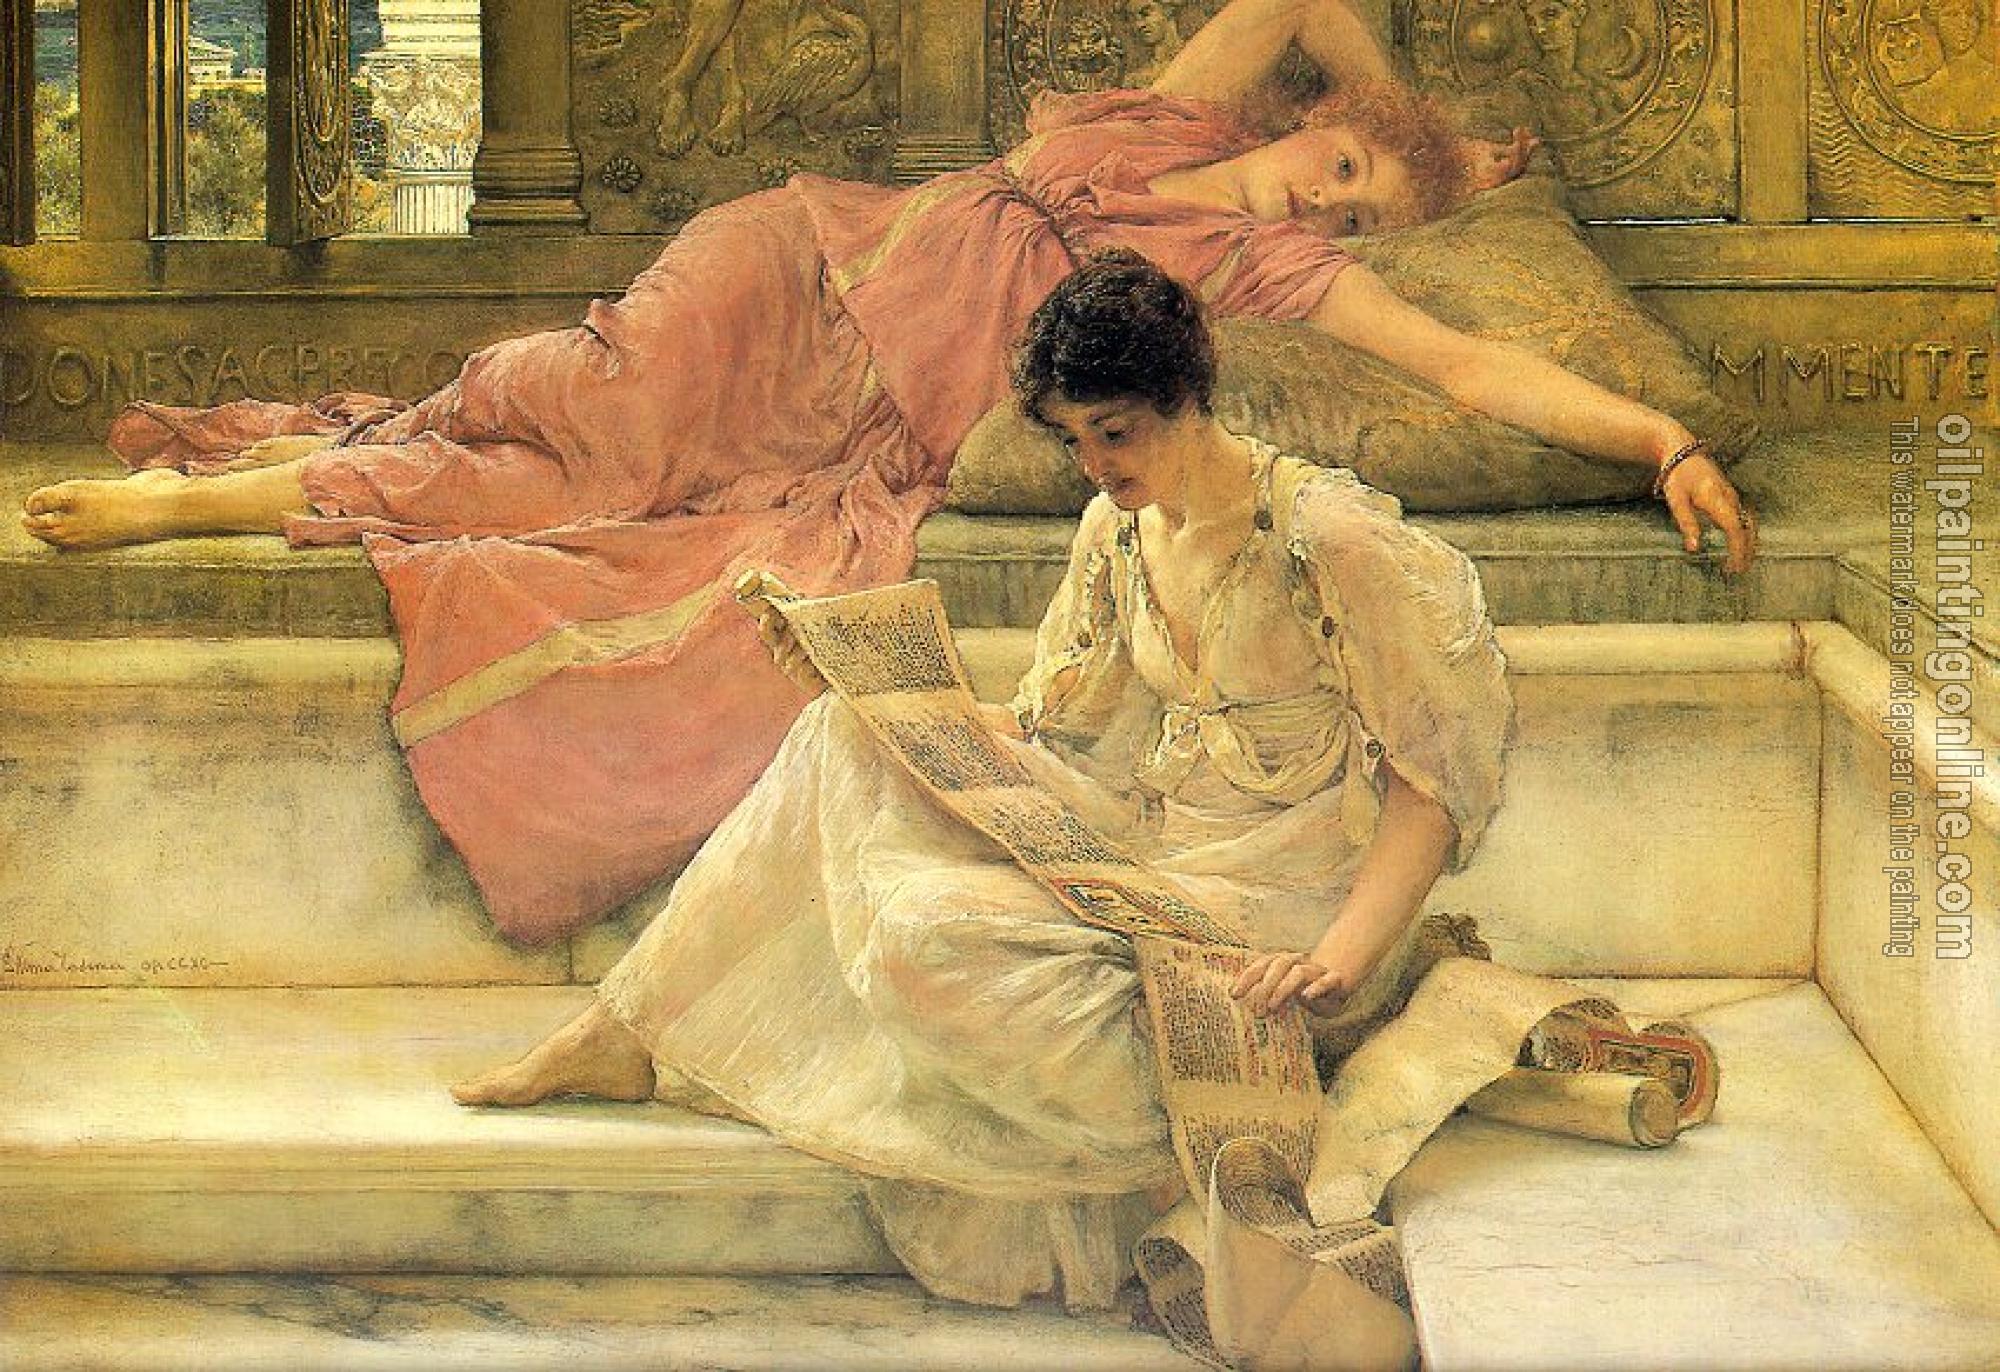 Alma-Tadema, Sir Lawrence - The Favorite Poet